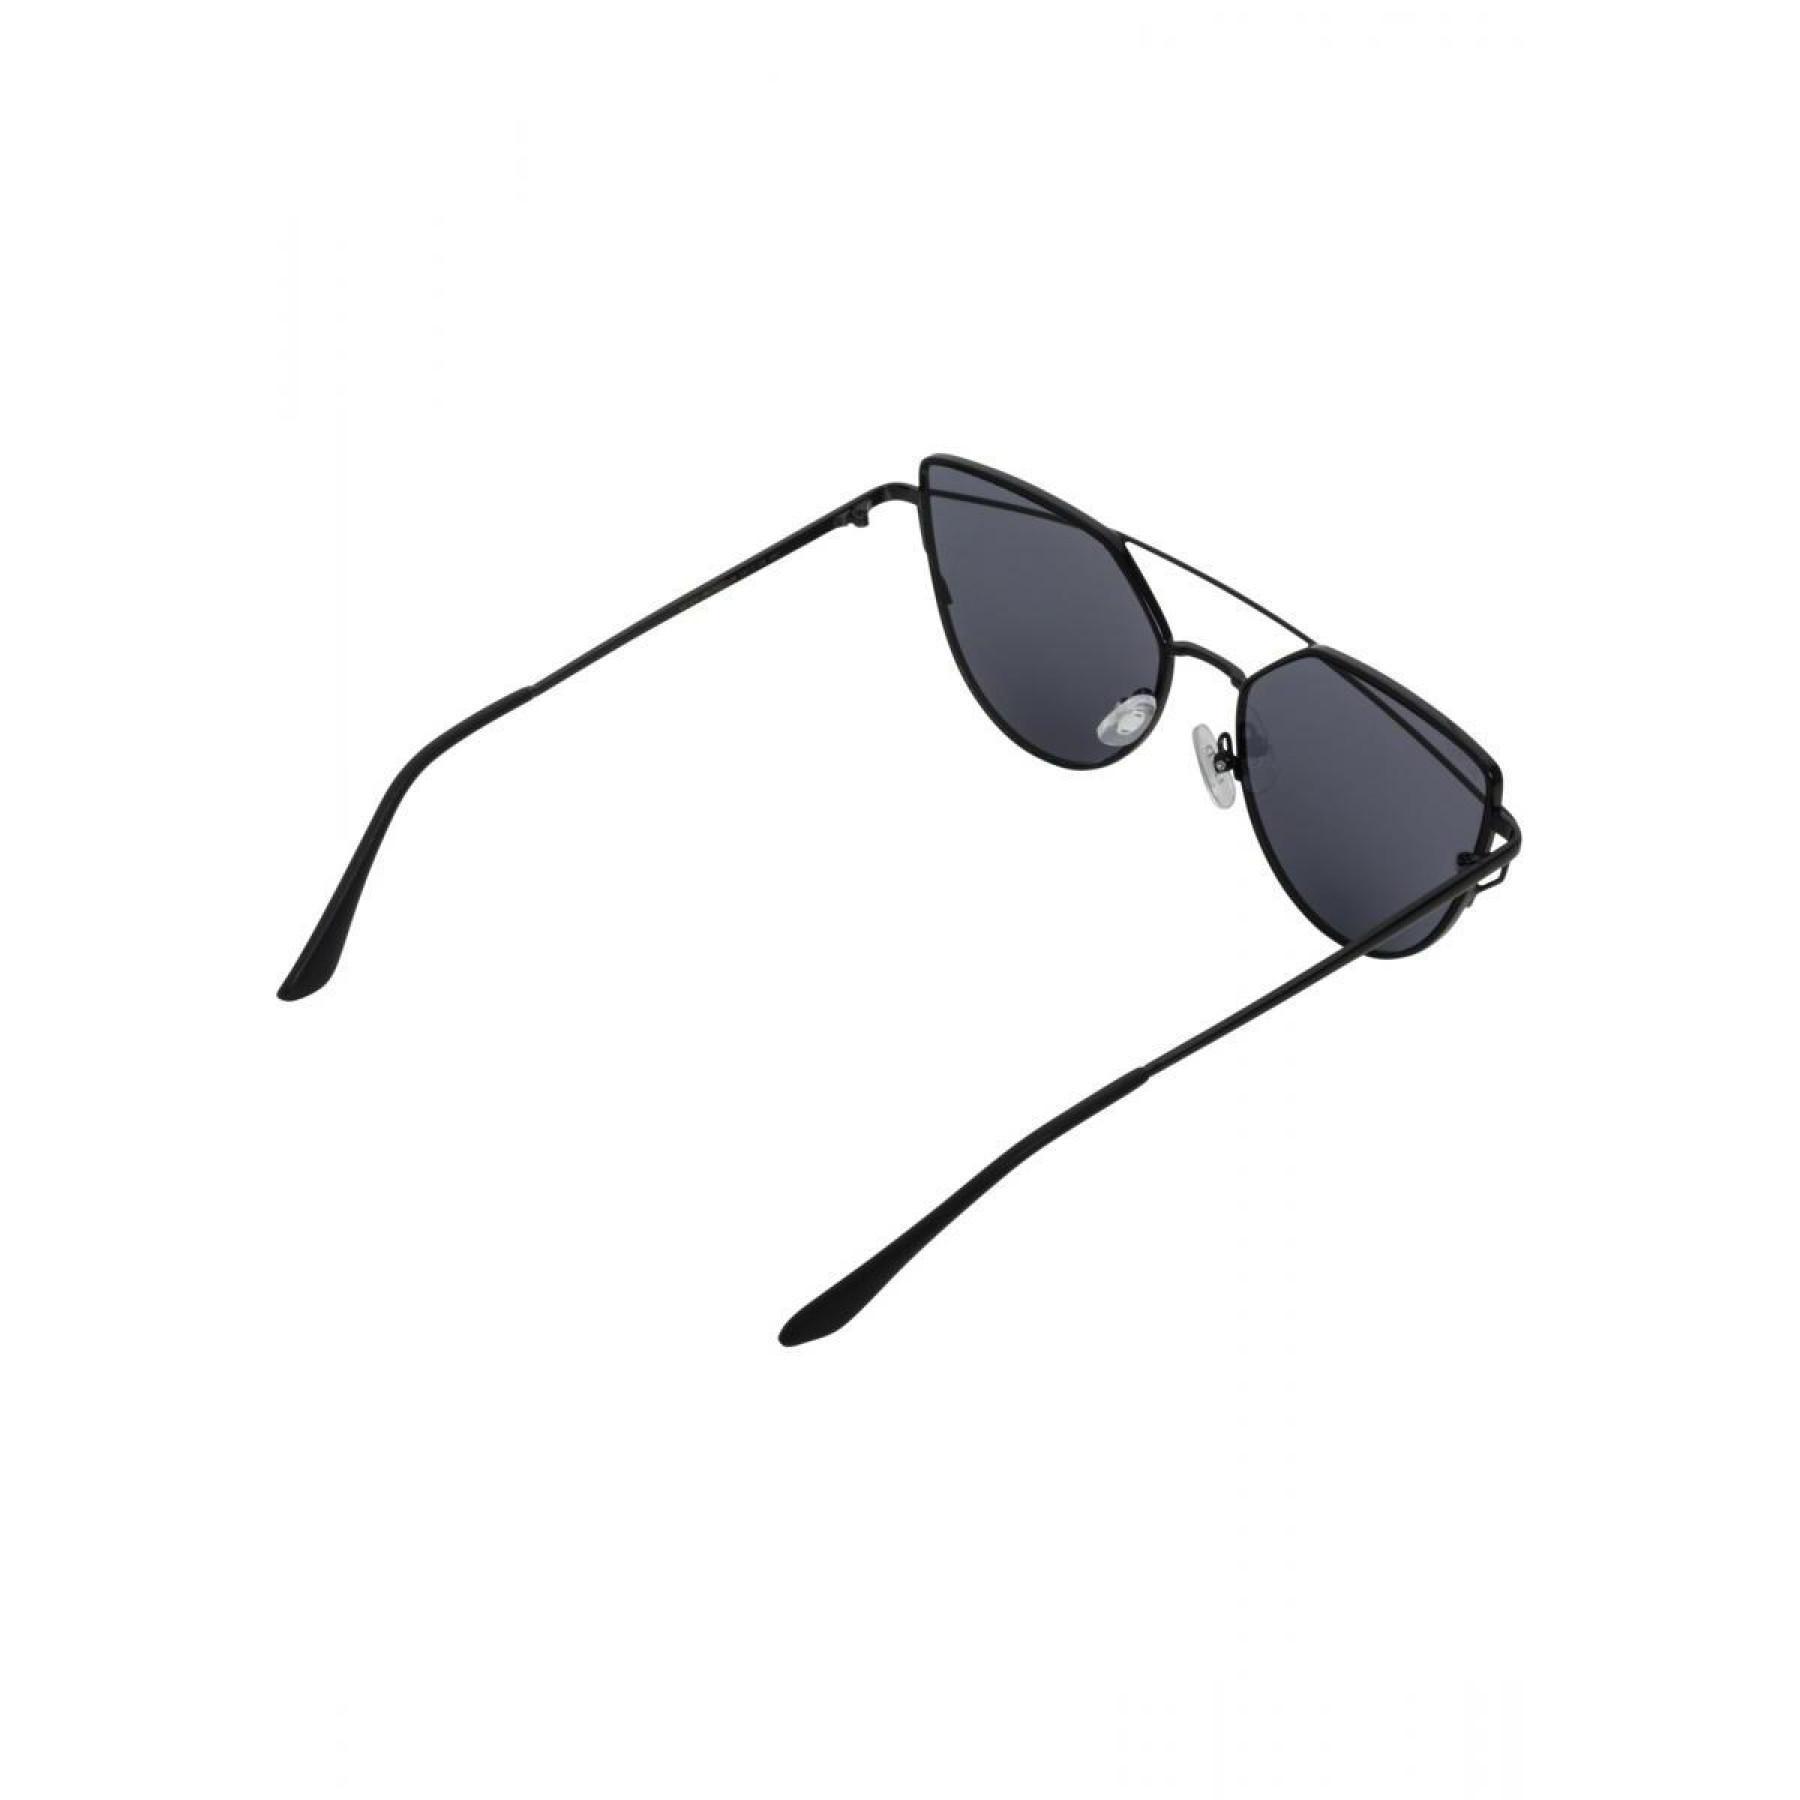 Sunglasses Masterdis july